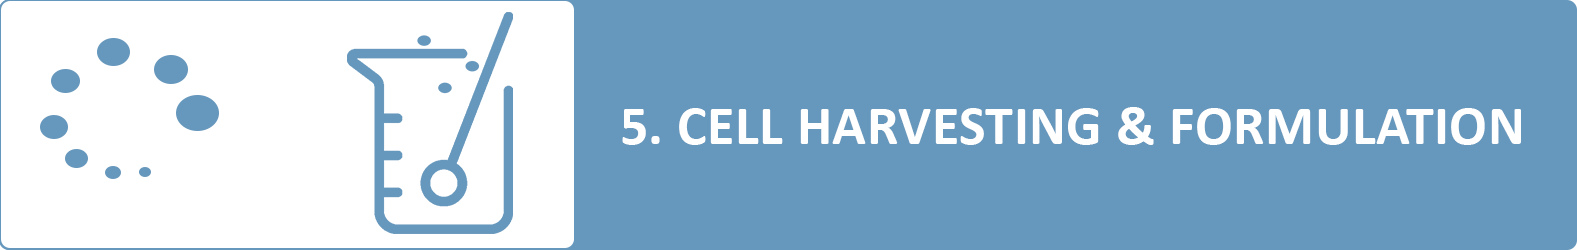 cell harvesting